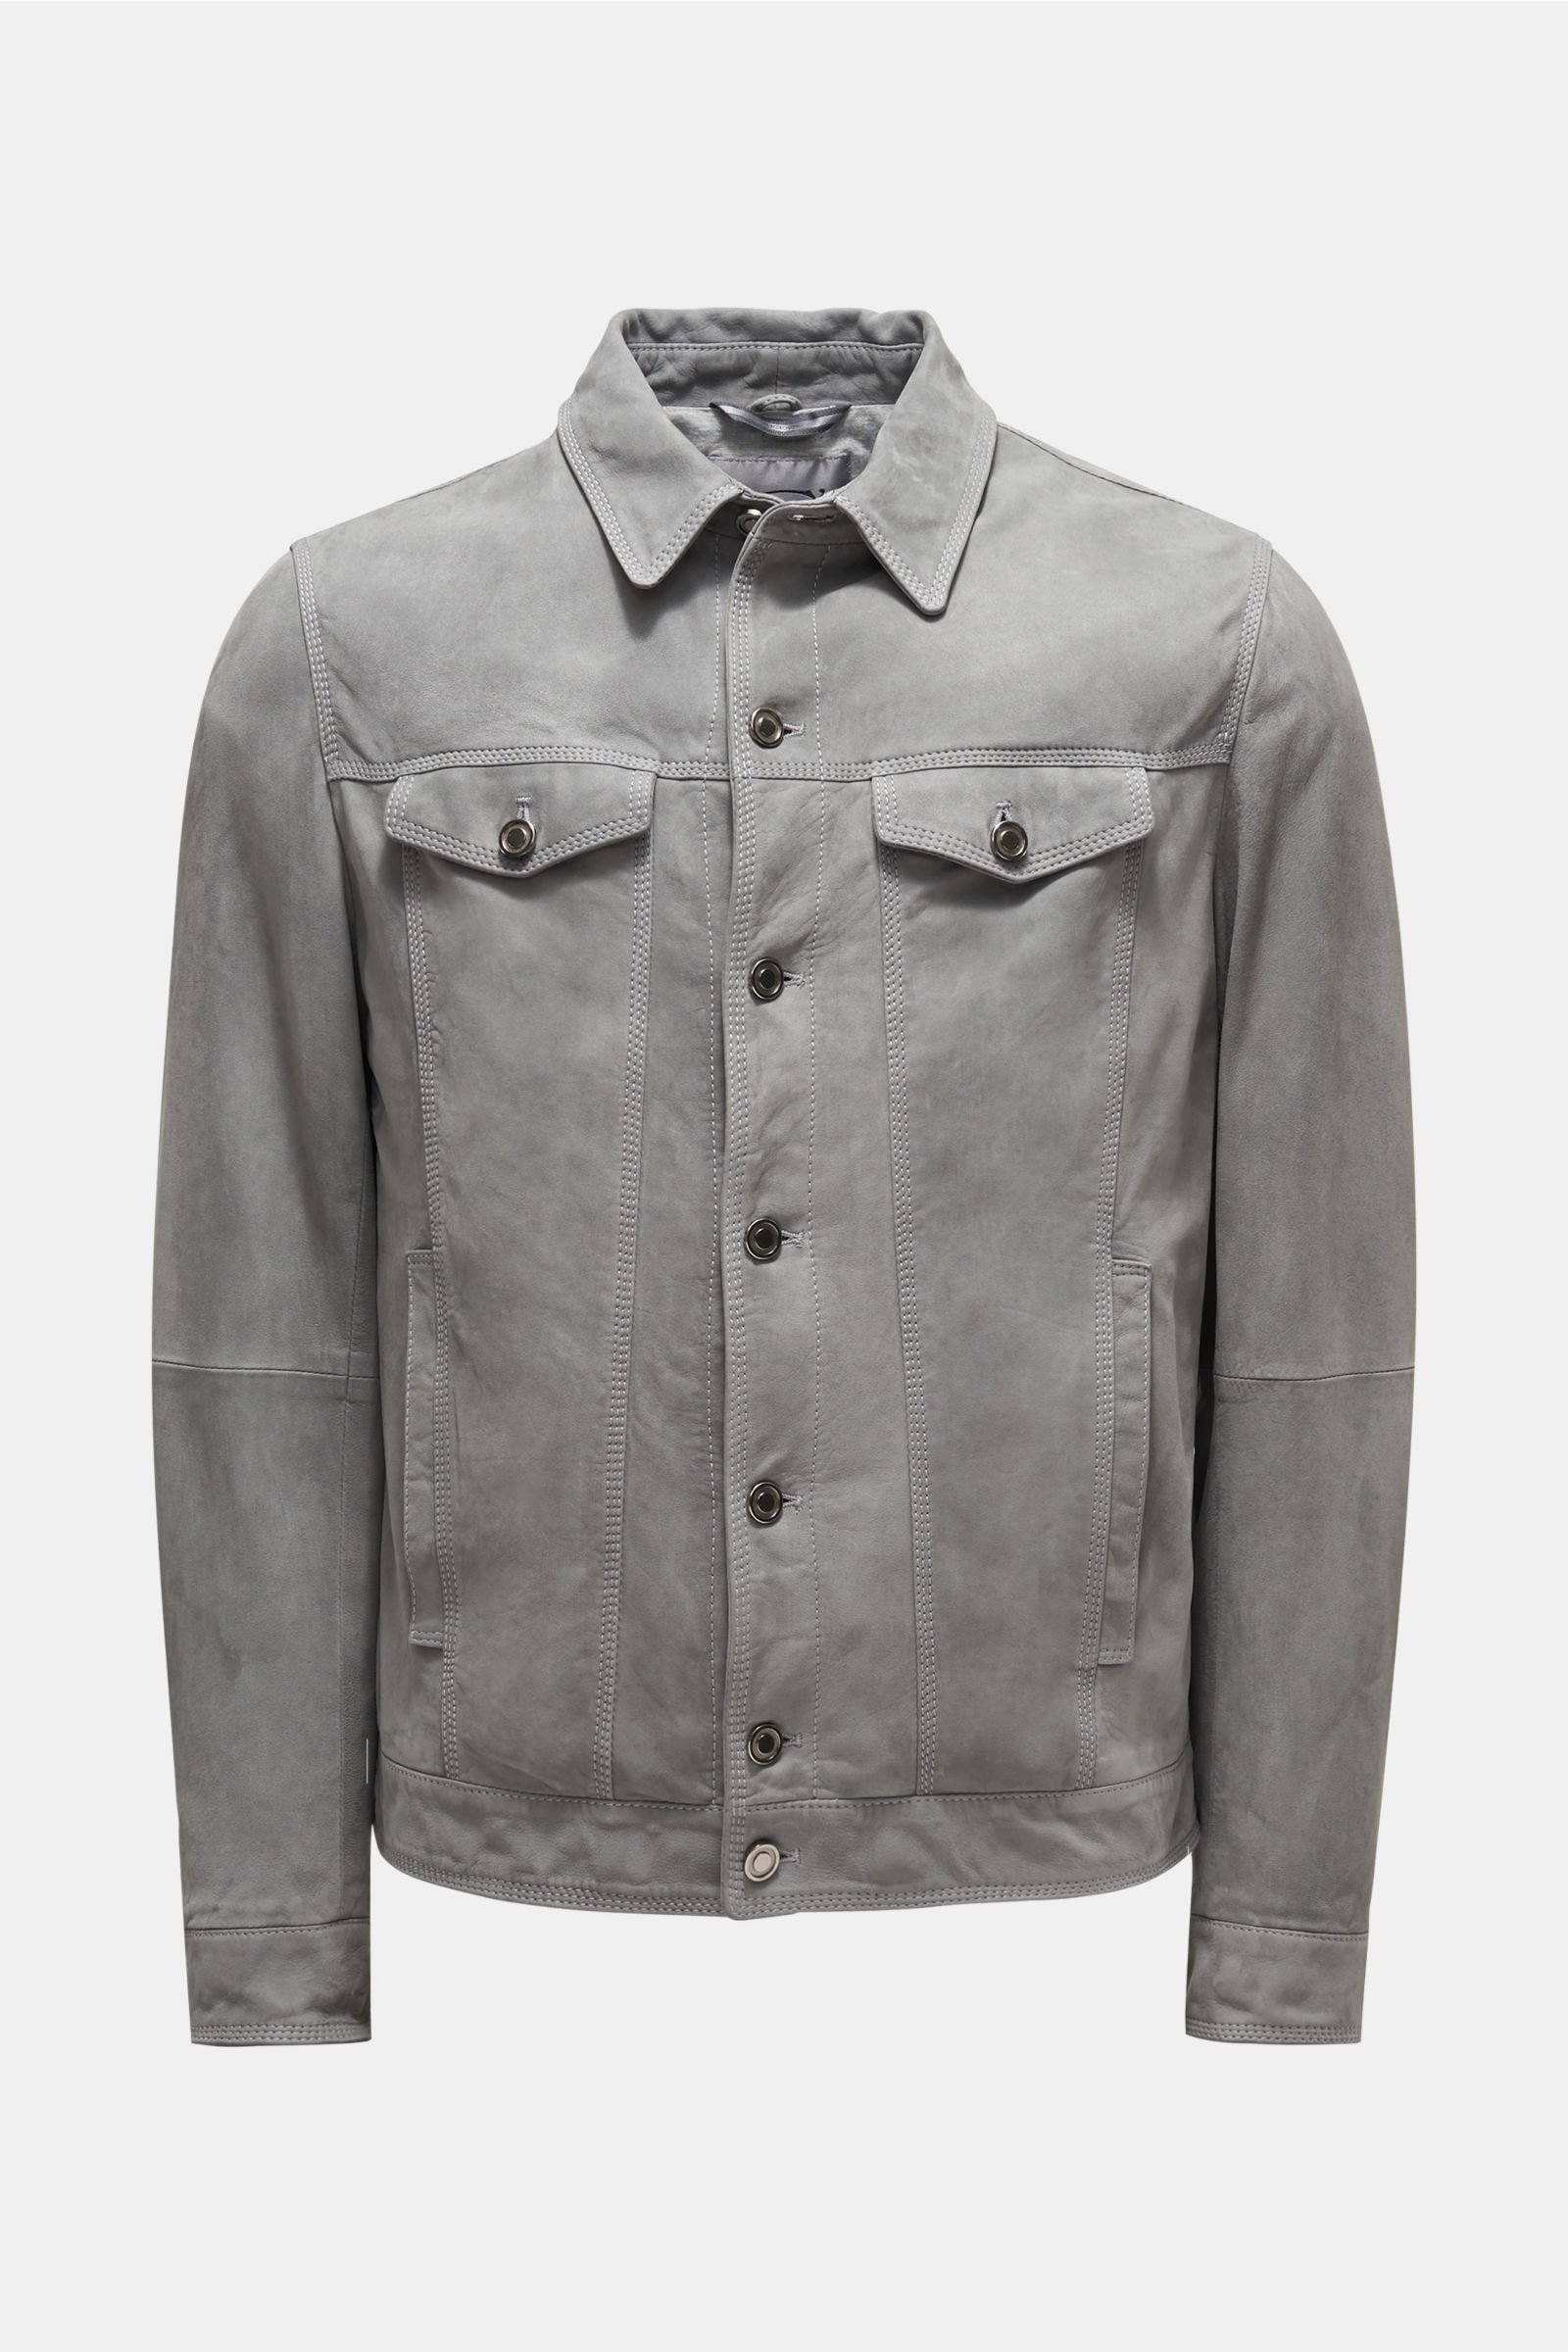 GIMO'S leather jacket grey | BRAUN Hamburg